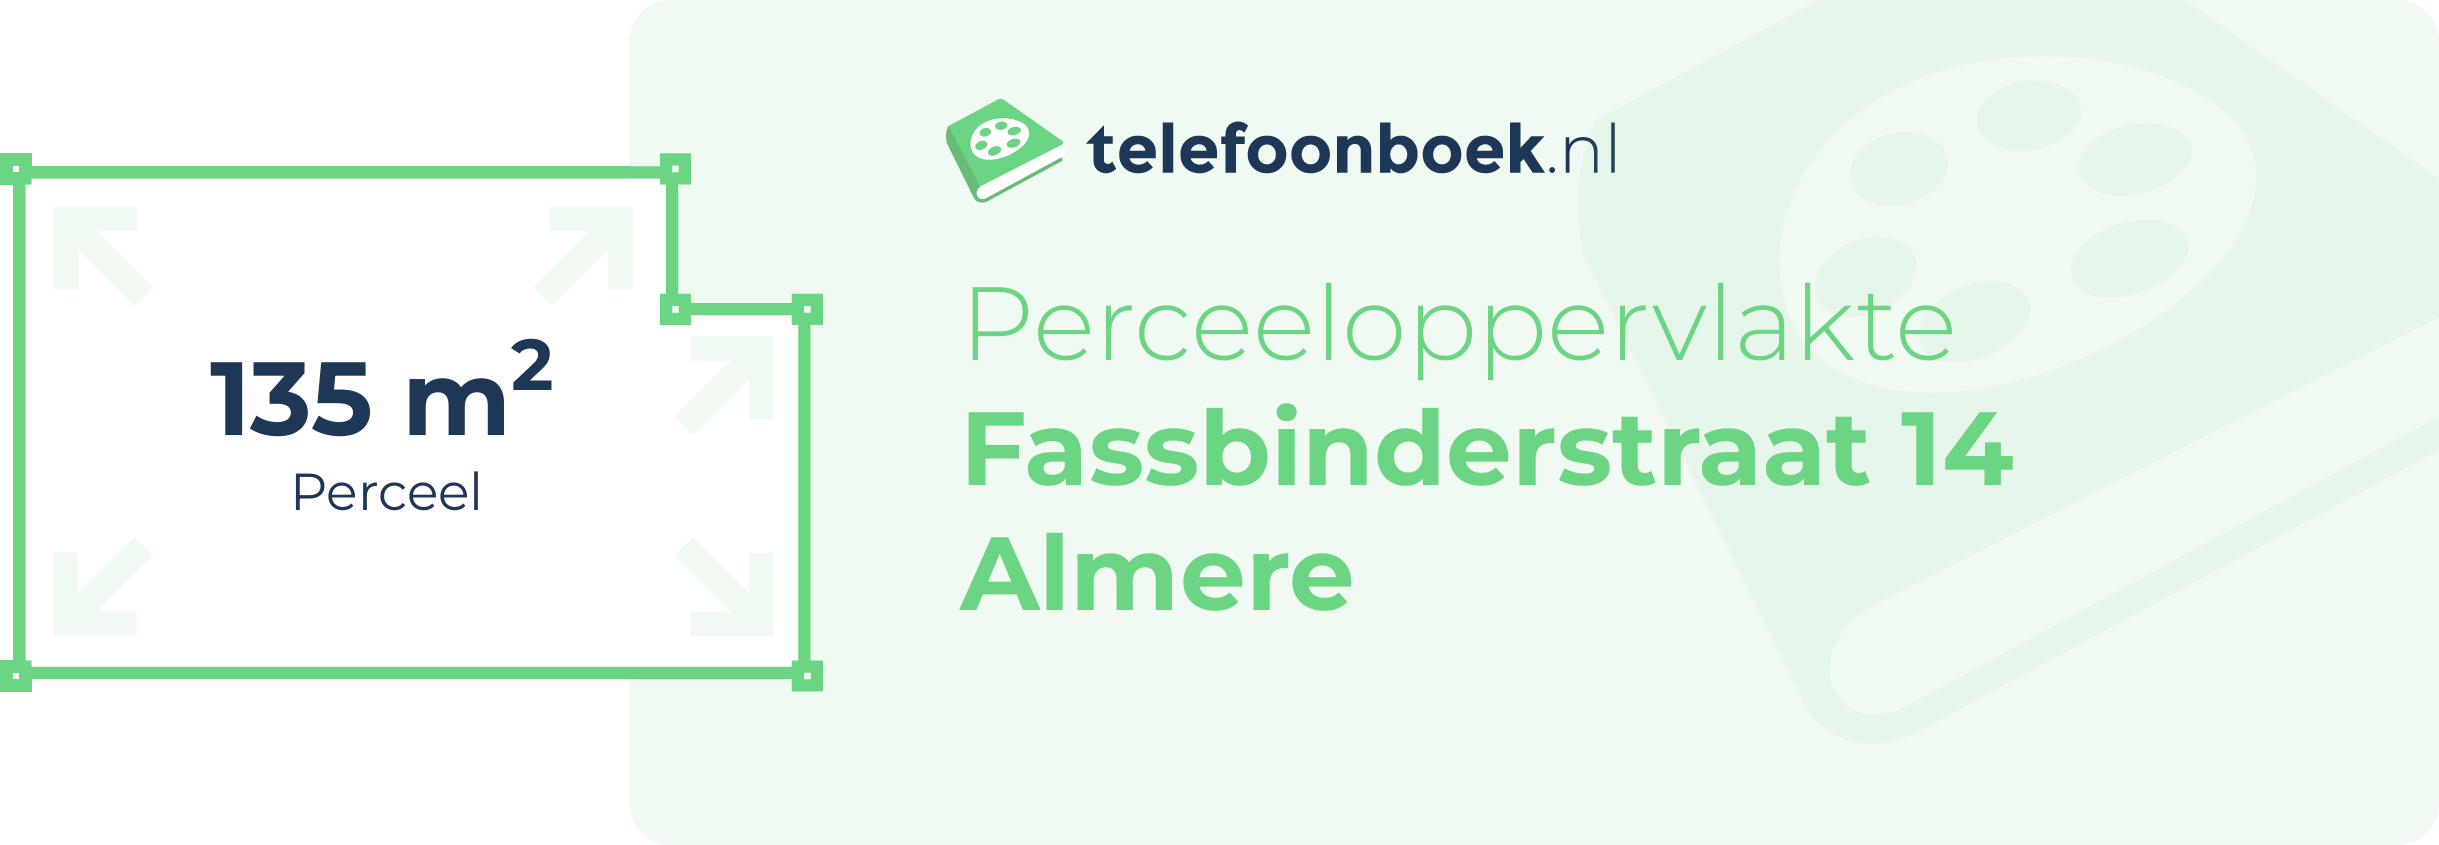 Perceeloppervlakte Fassbinderstraat 14 Almere